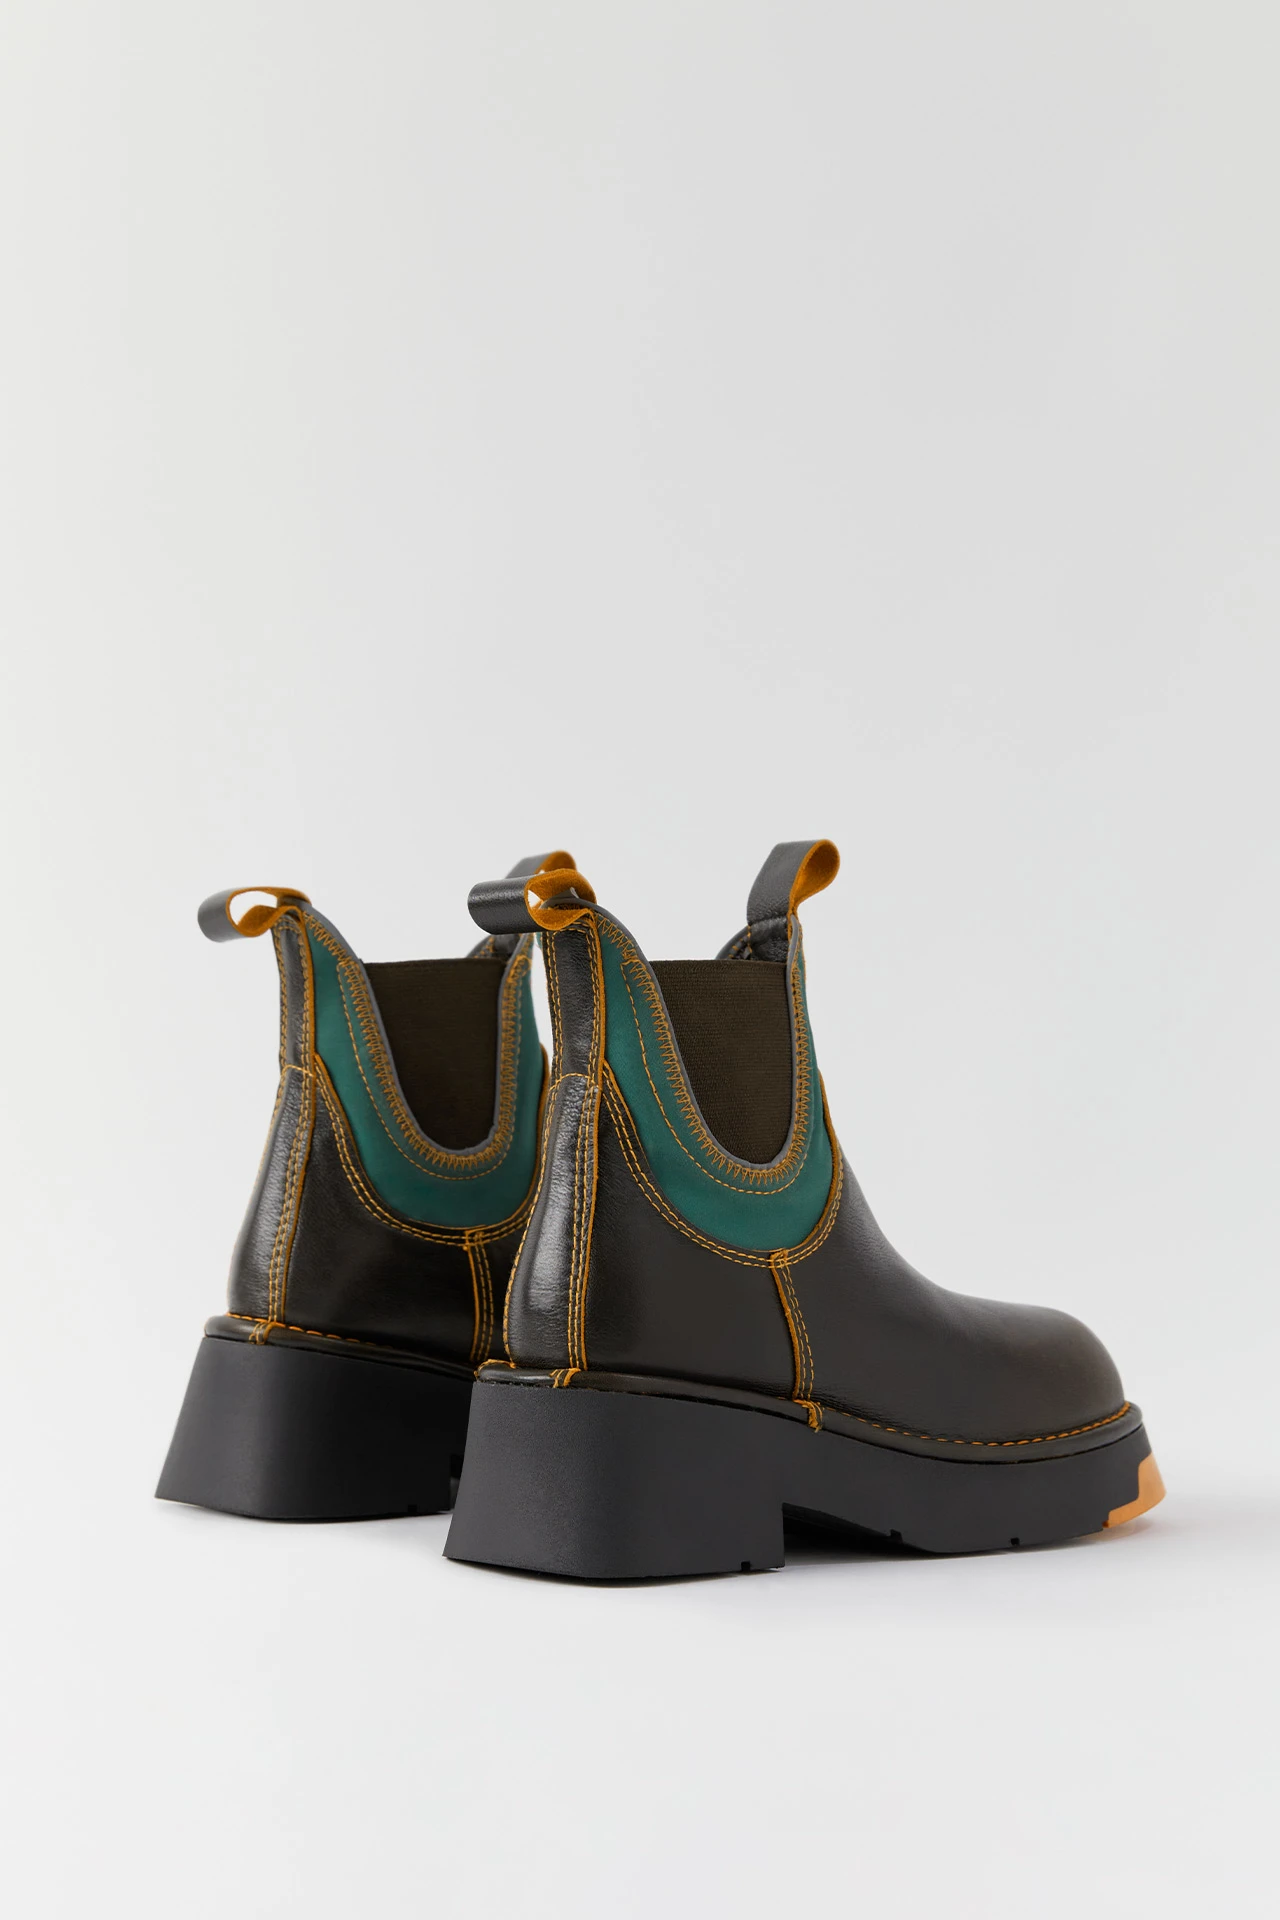 miista-kaya-brown-orange-ankle-boots-06